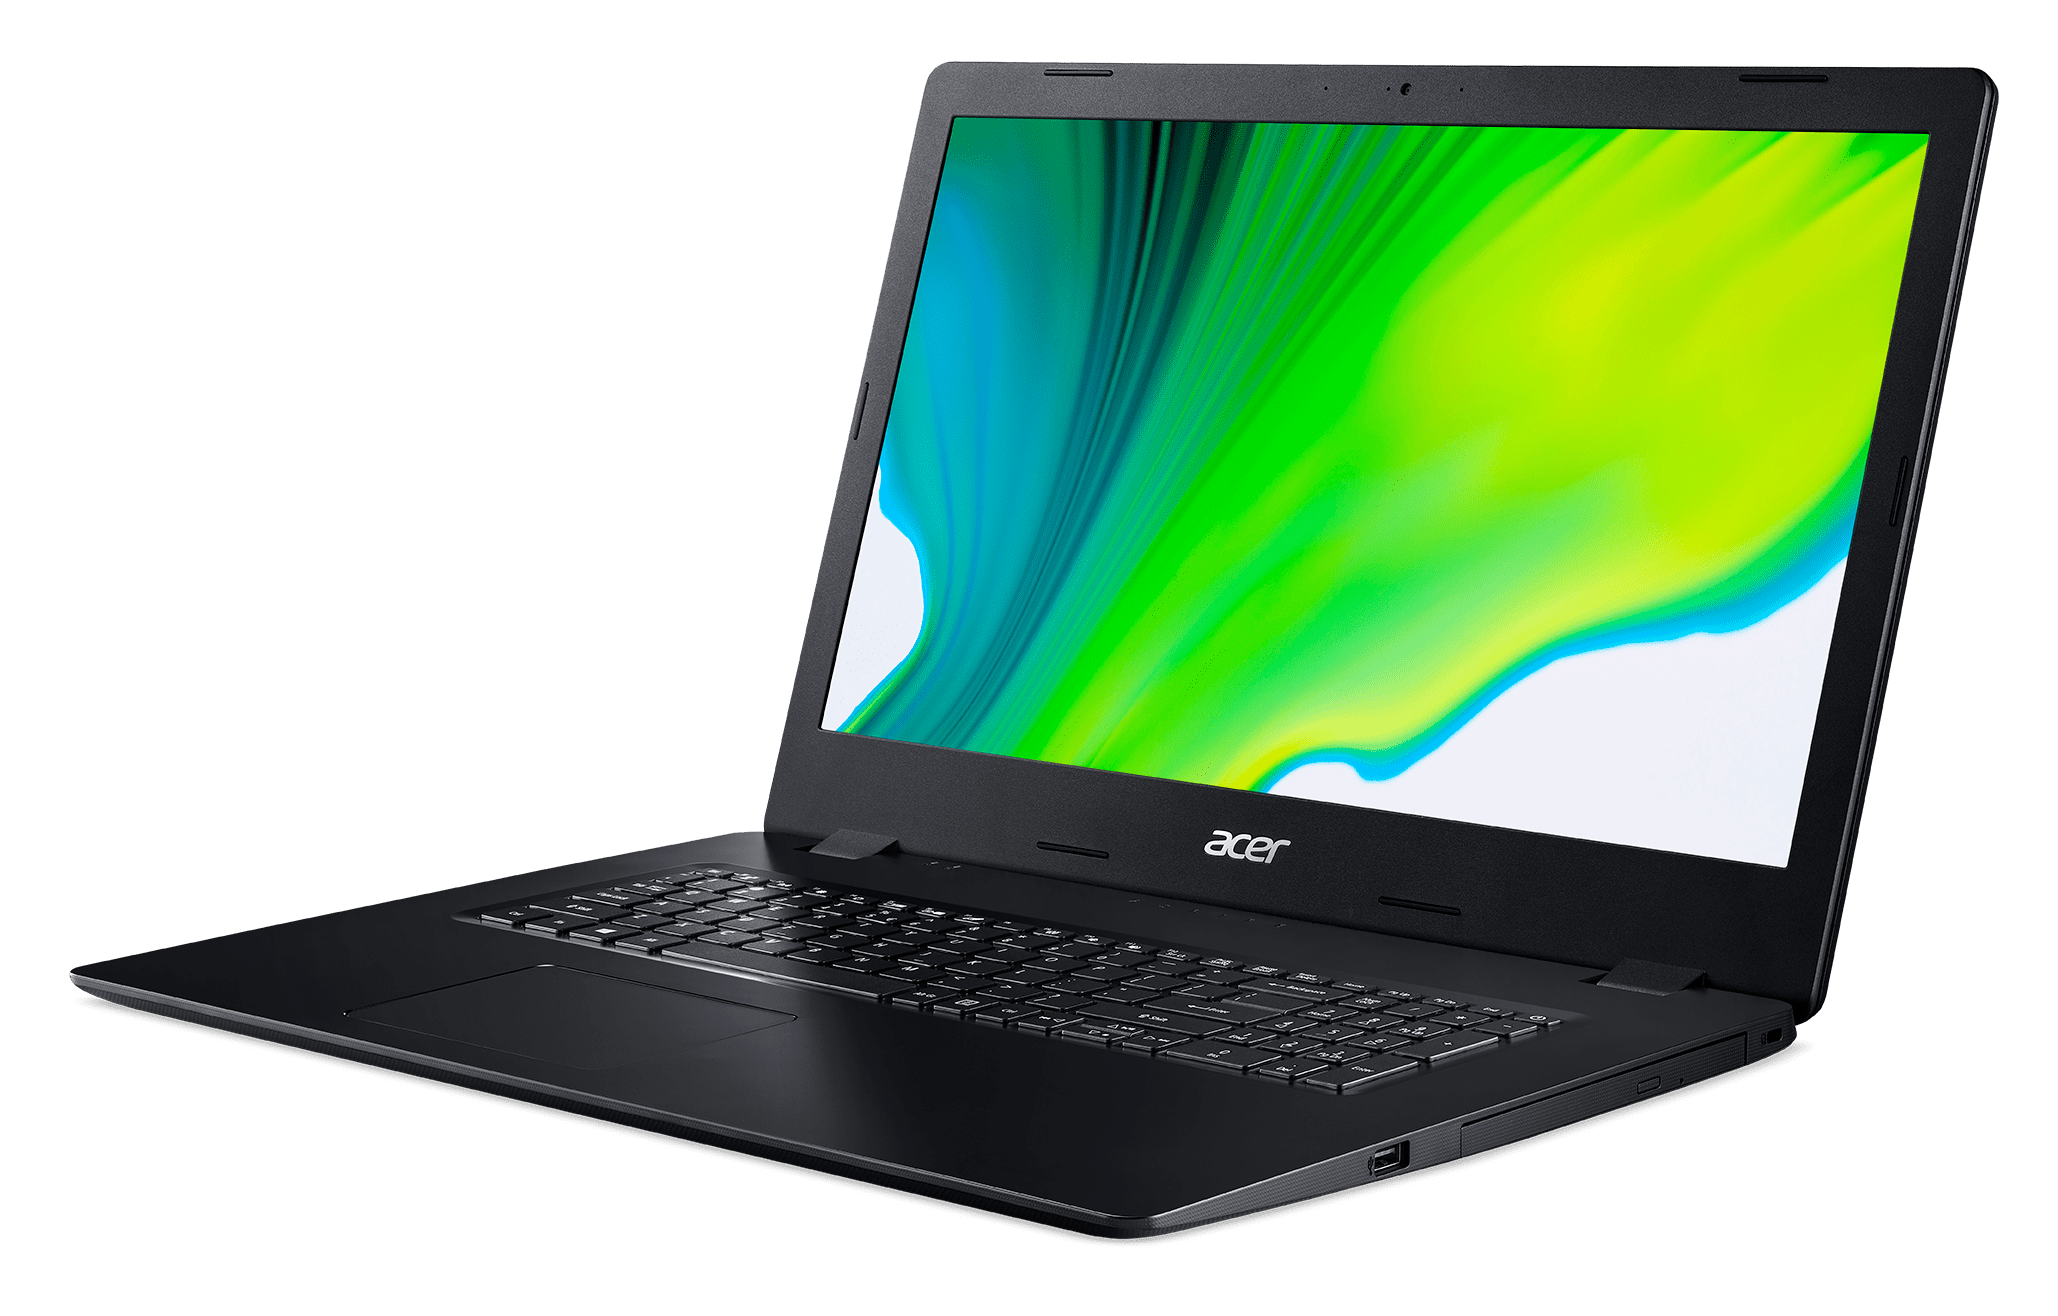 Harga Laptop Acer Core I5 Ram 8gb - Homecare24